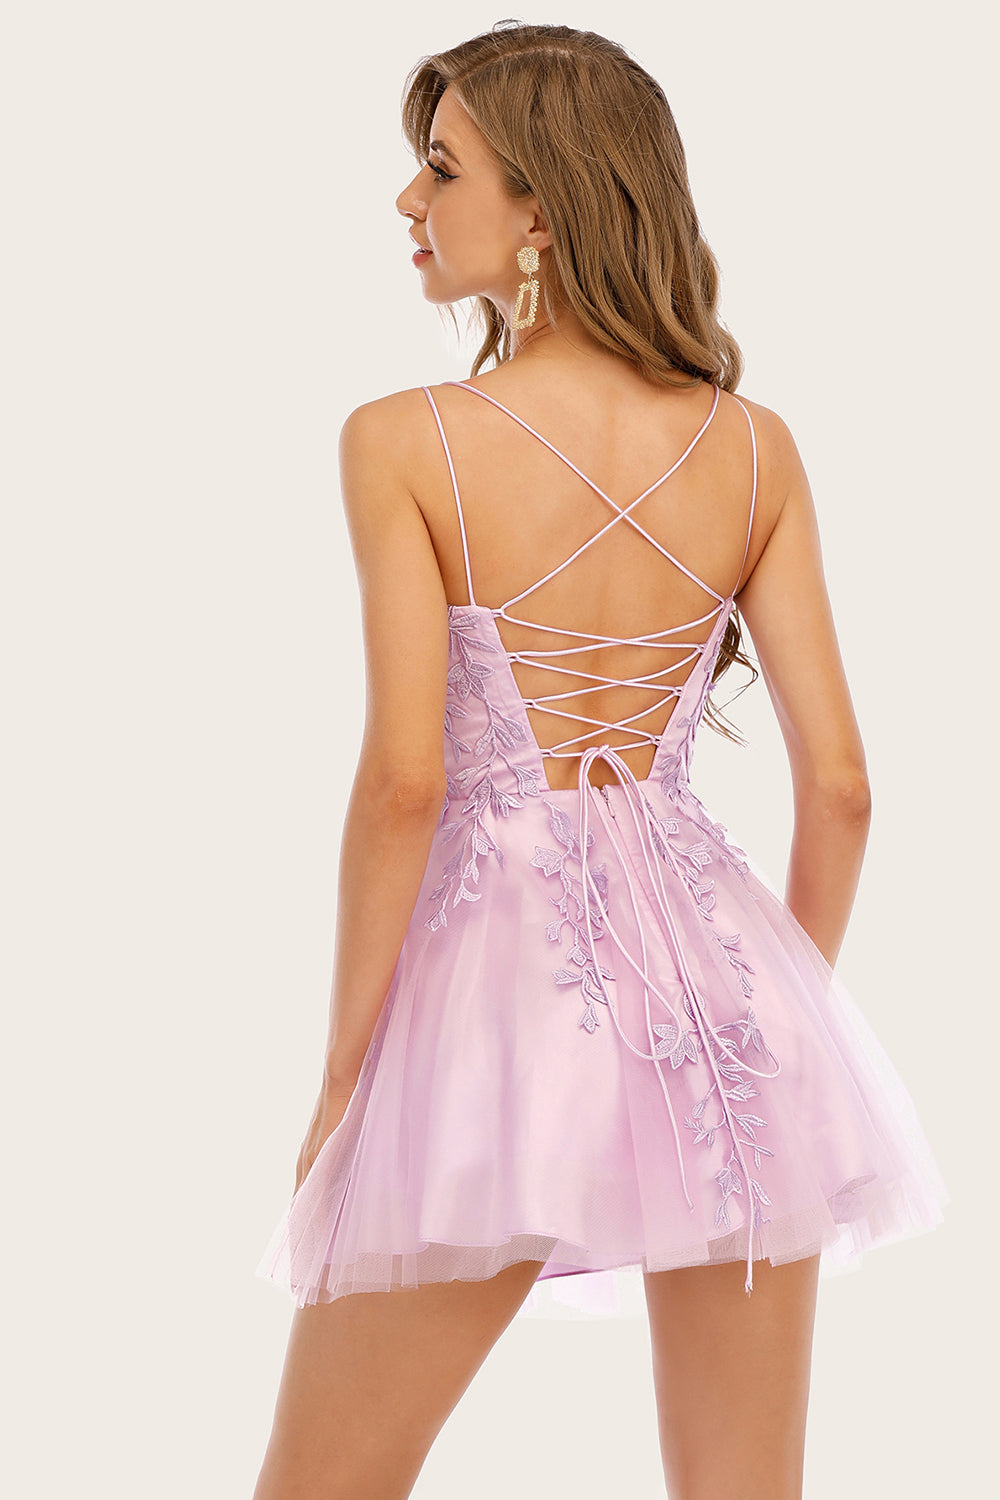 Pink Spaghetti Straps Homecoming Dress